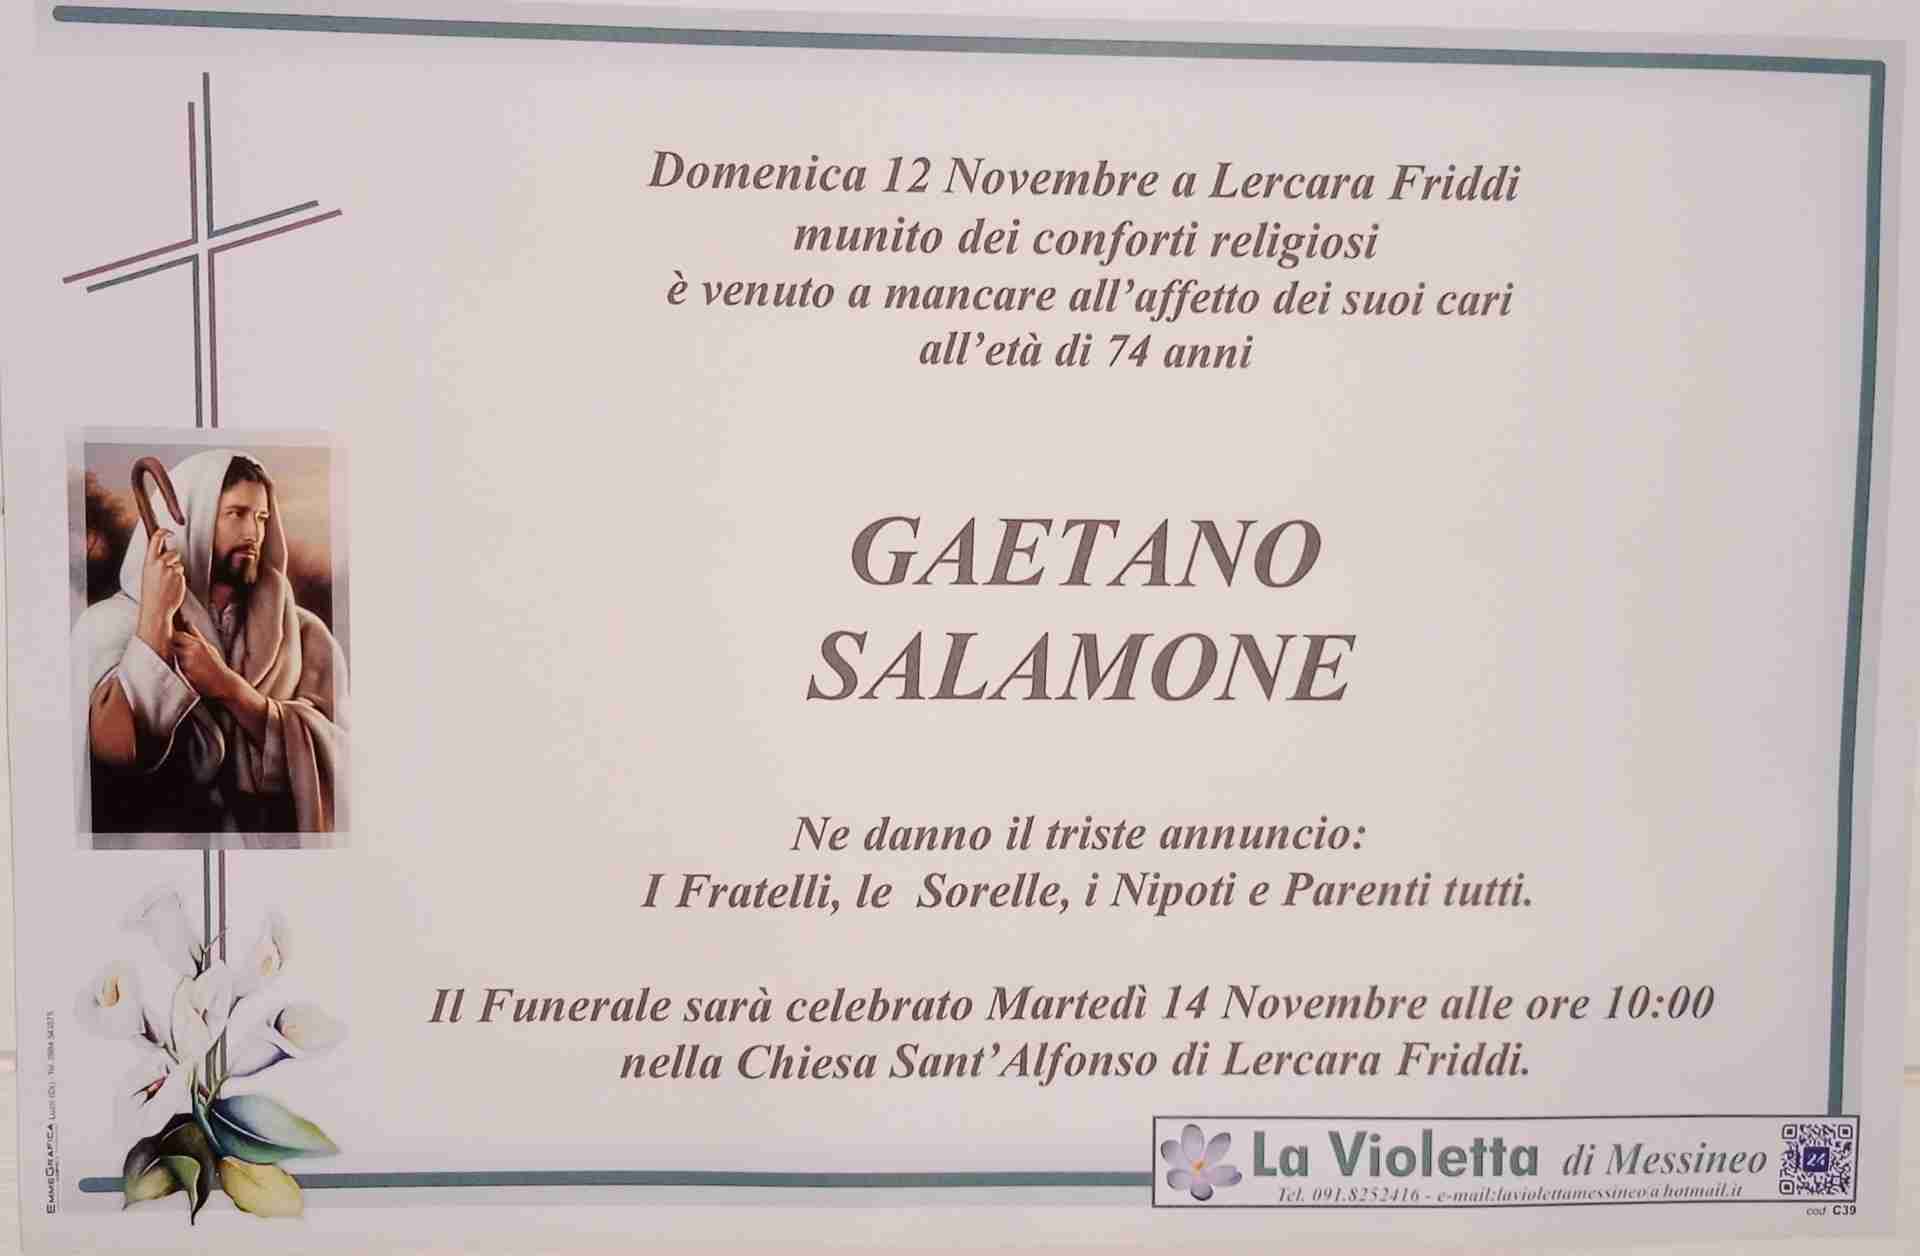 Gaetano Salamone